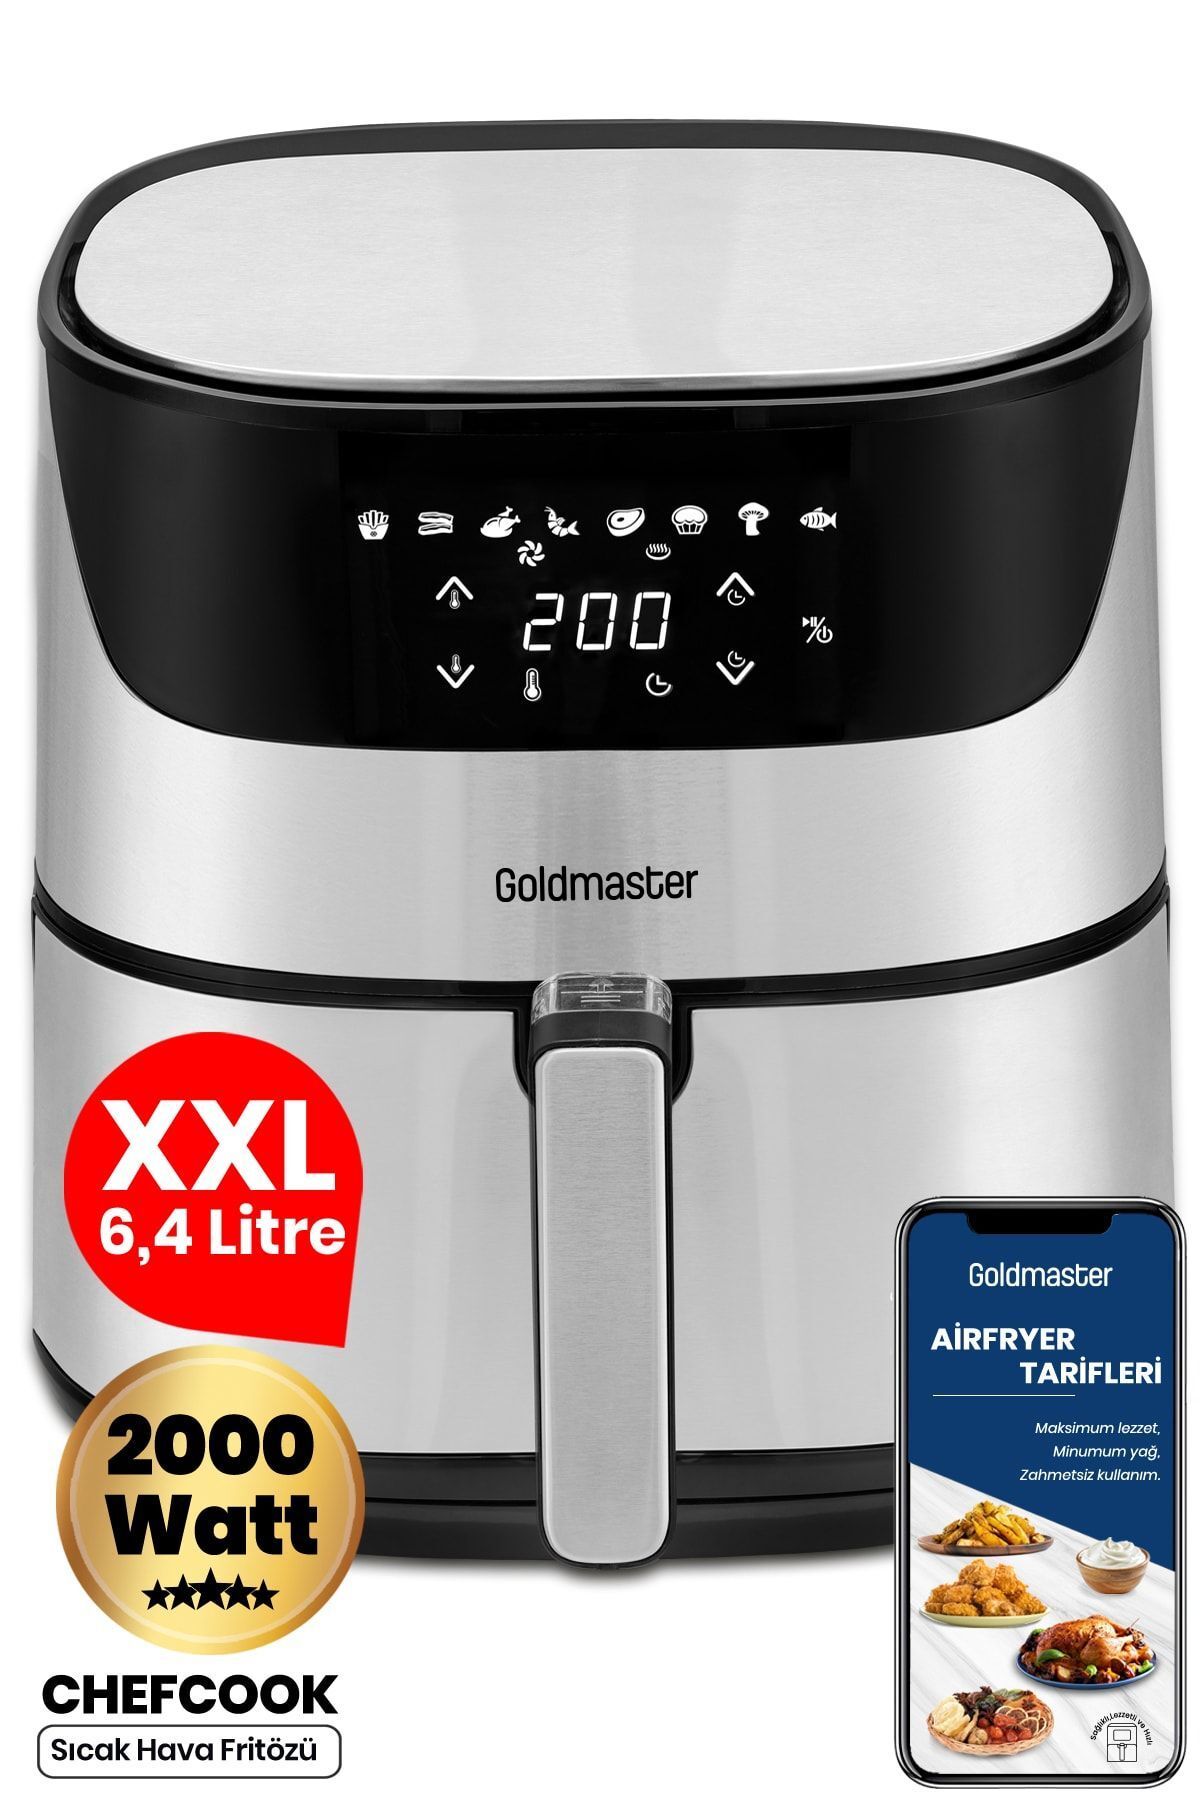 GoldMaster Chefcook 2000 Watt Yüksek Güç 6,4 Litre Inox Geniş Xxl Dokunmatik Airfryer Yağsız Sıcak Hava Fritözü